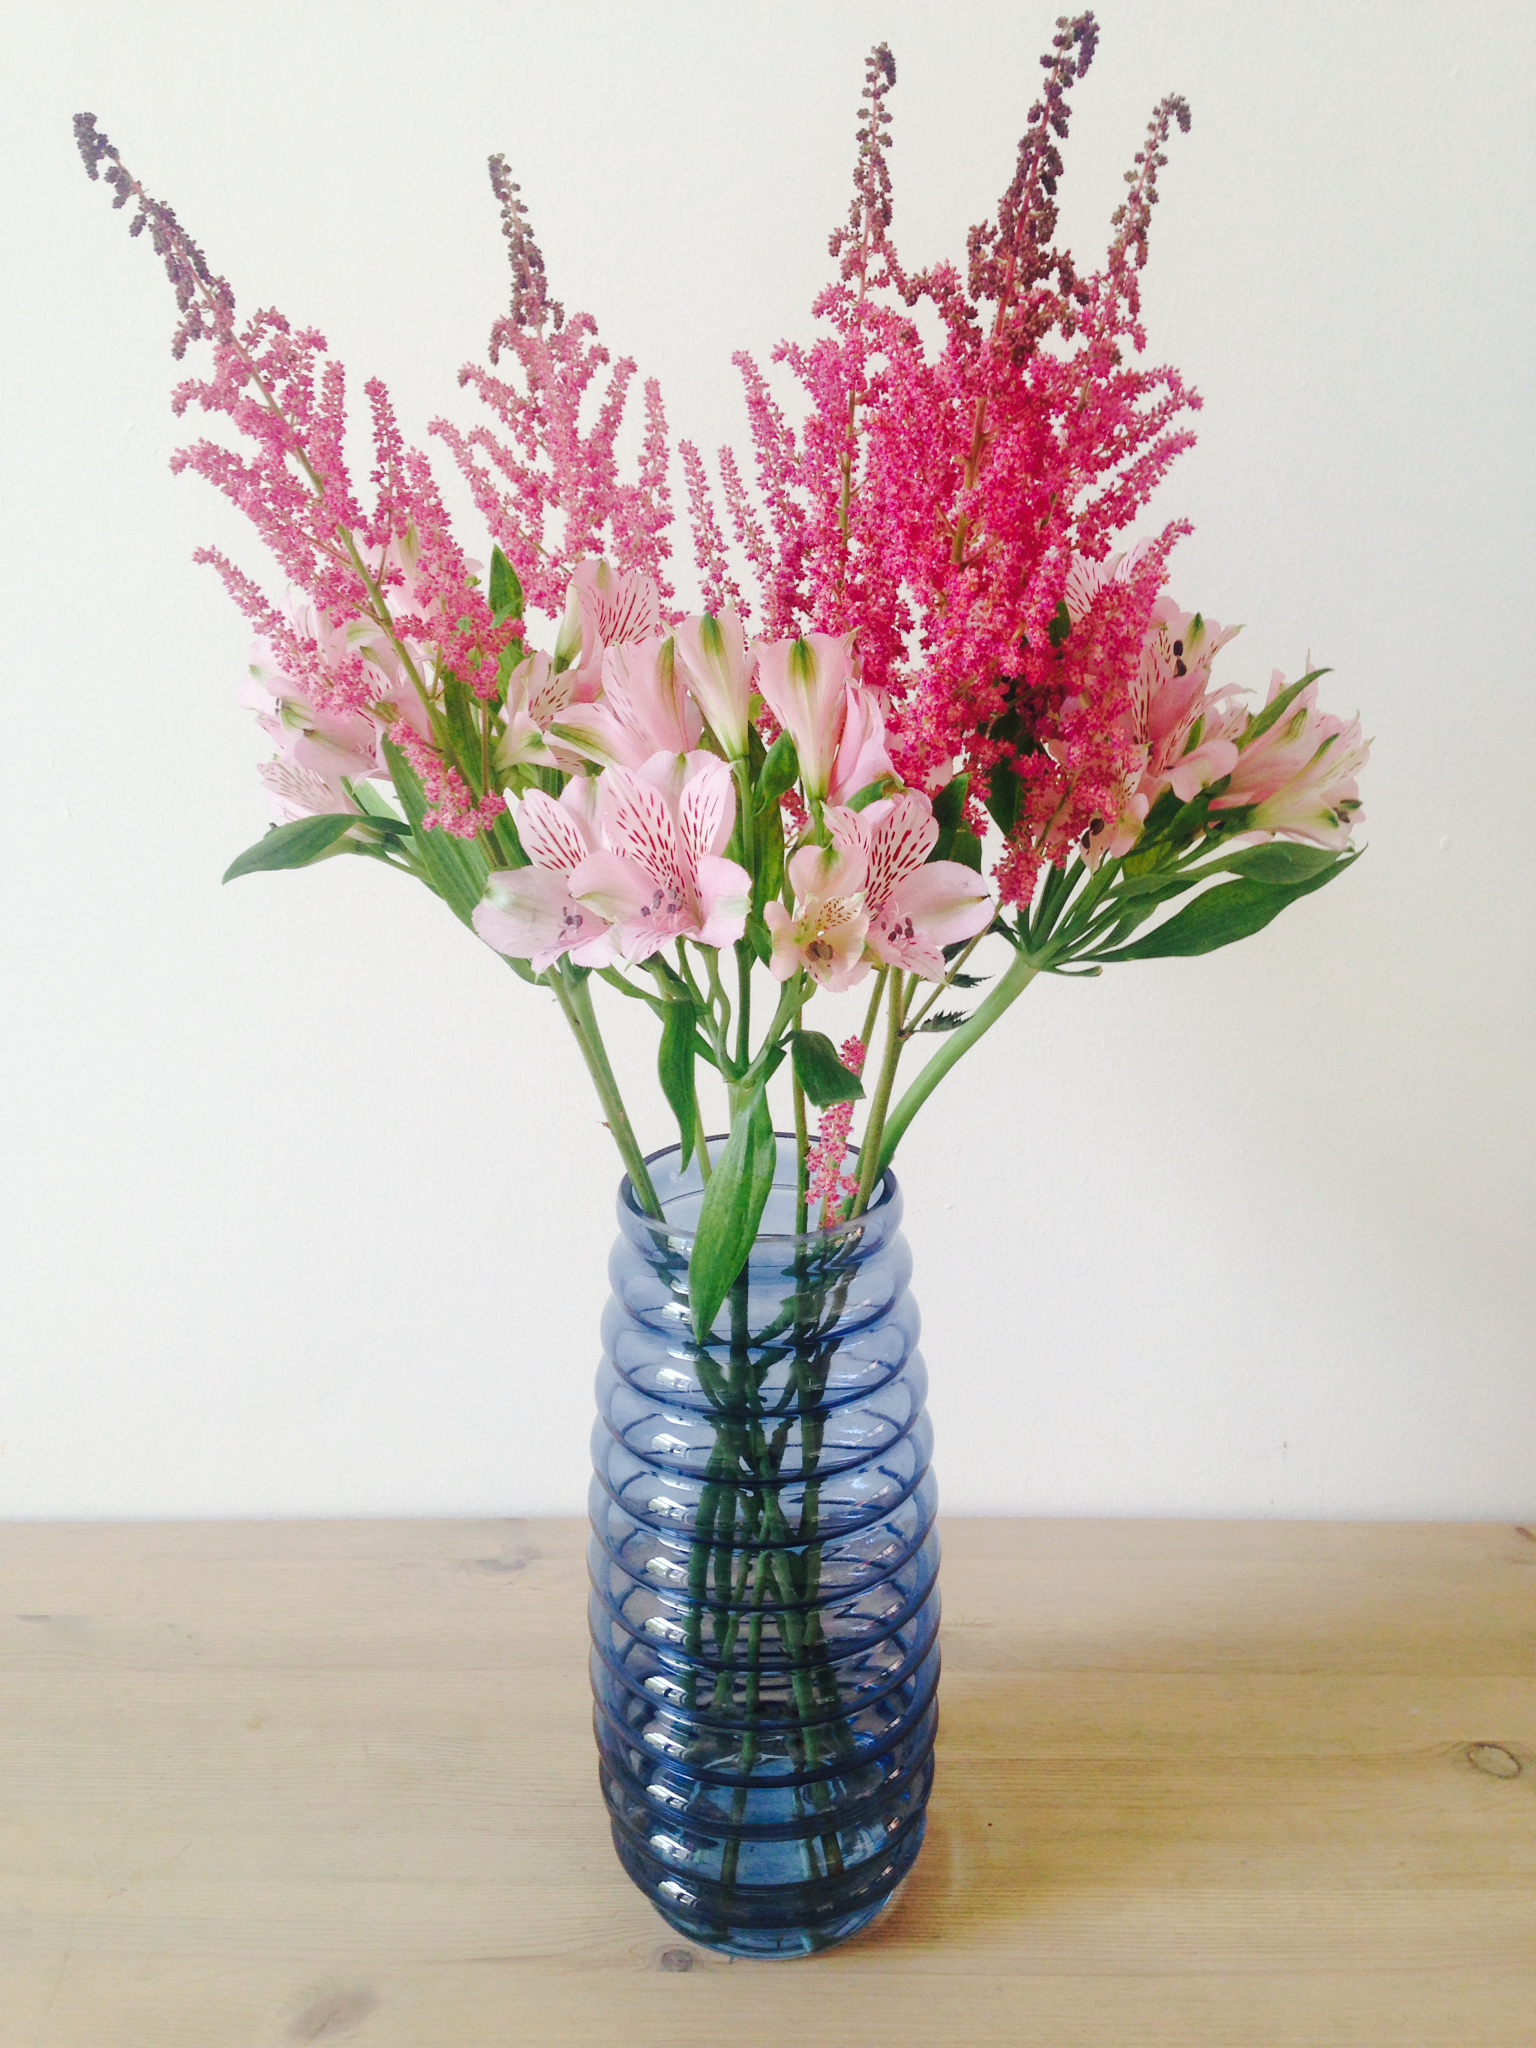 1637964579 392 VASE ARRANGEMENTS Bloomy Blog Flower tips and more - VASE ARRANGEMENTS -  |  Flower tips and more